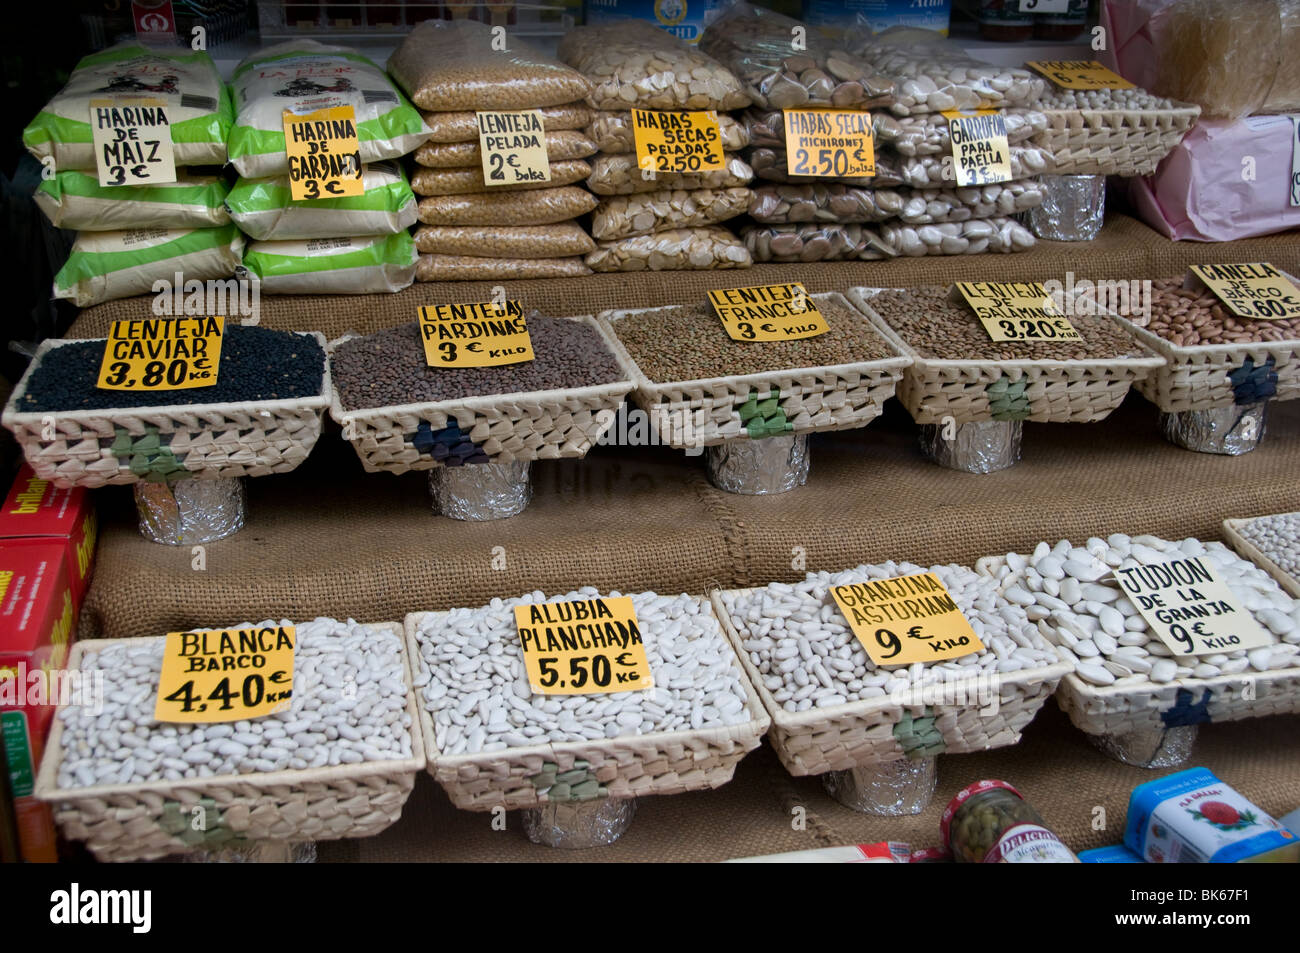 Spanien trockenen Bohnen Bohnen Gemüse Lebensmittelhändler Madrid Stockfoto